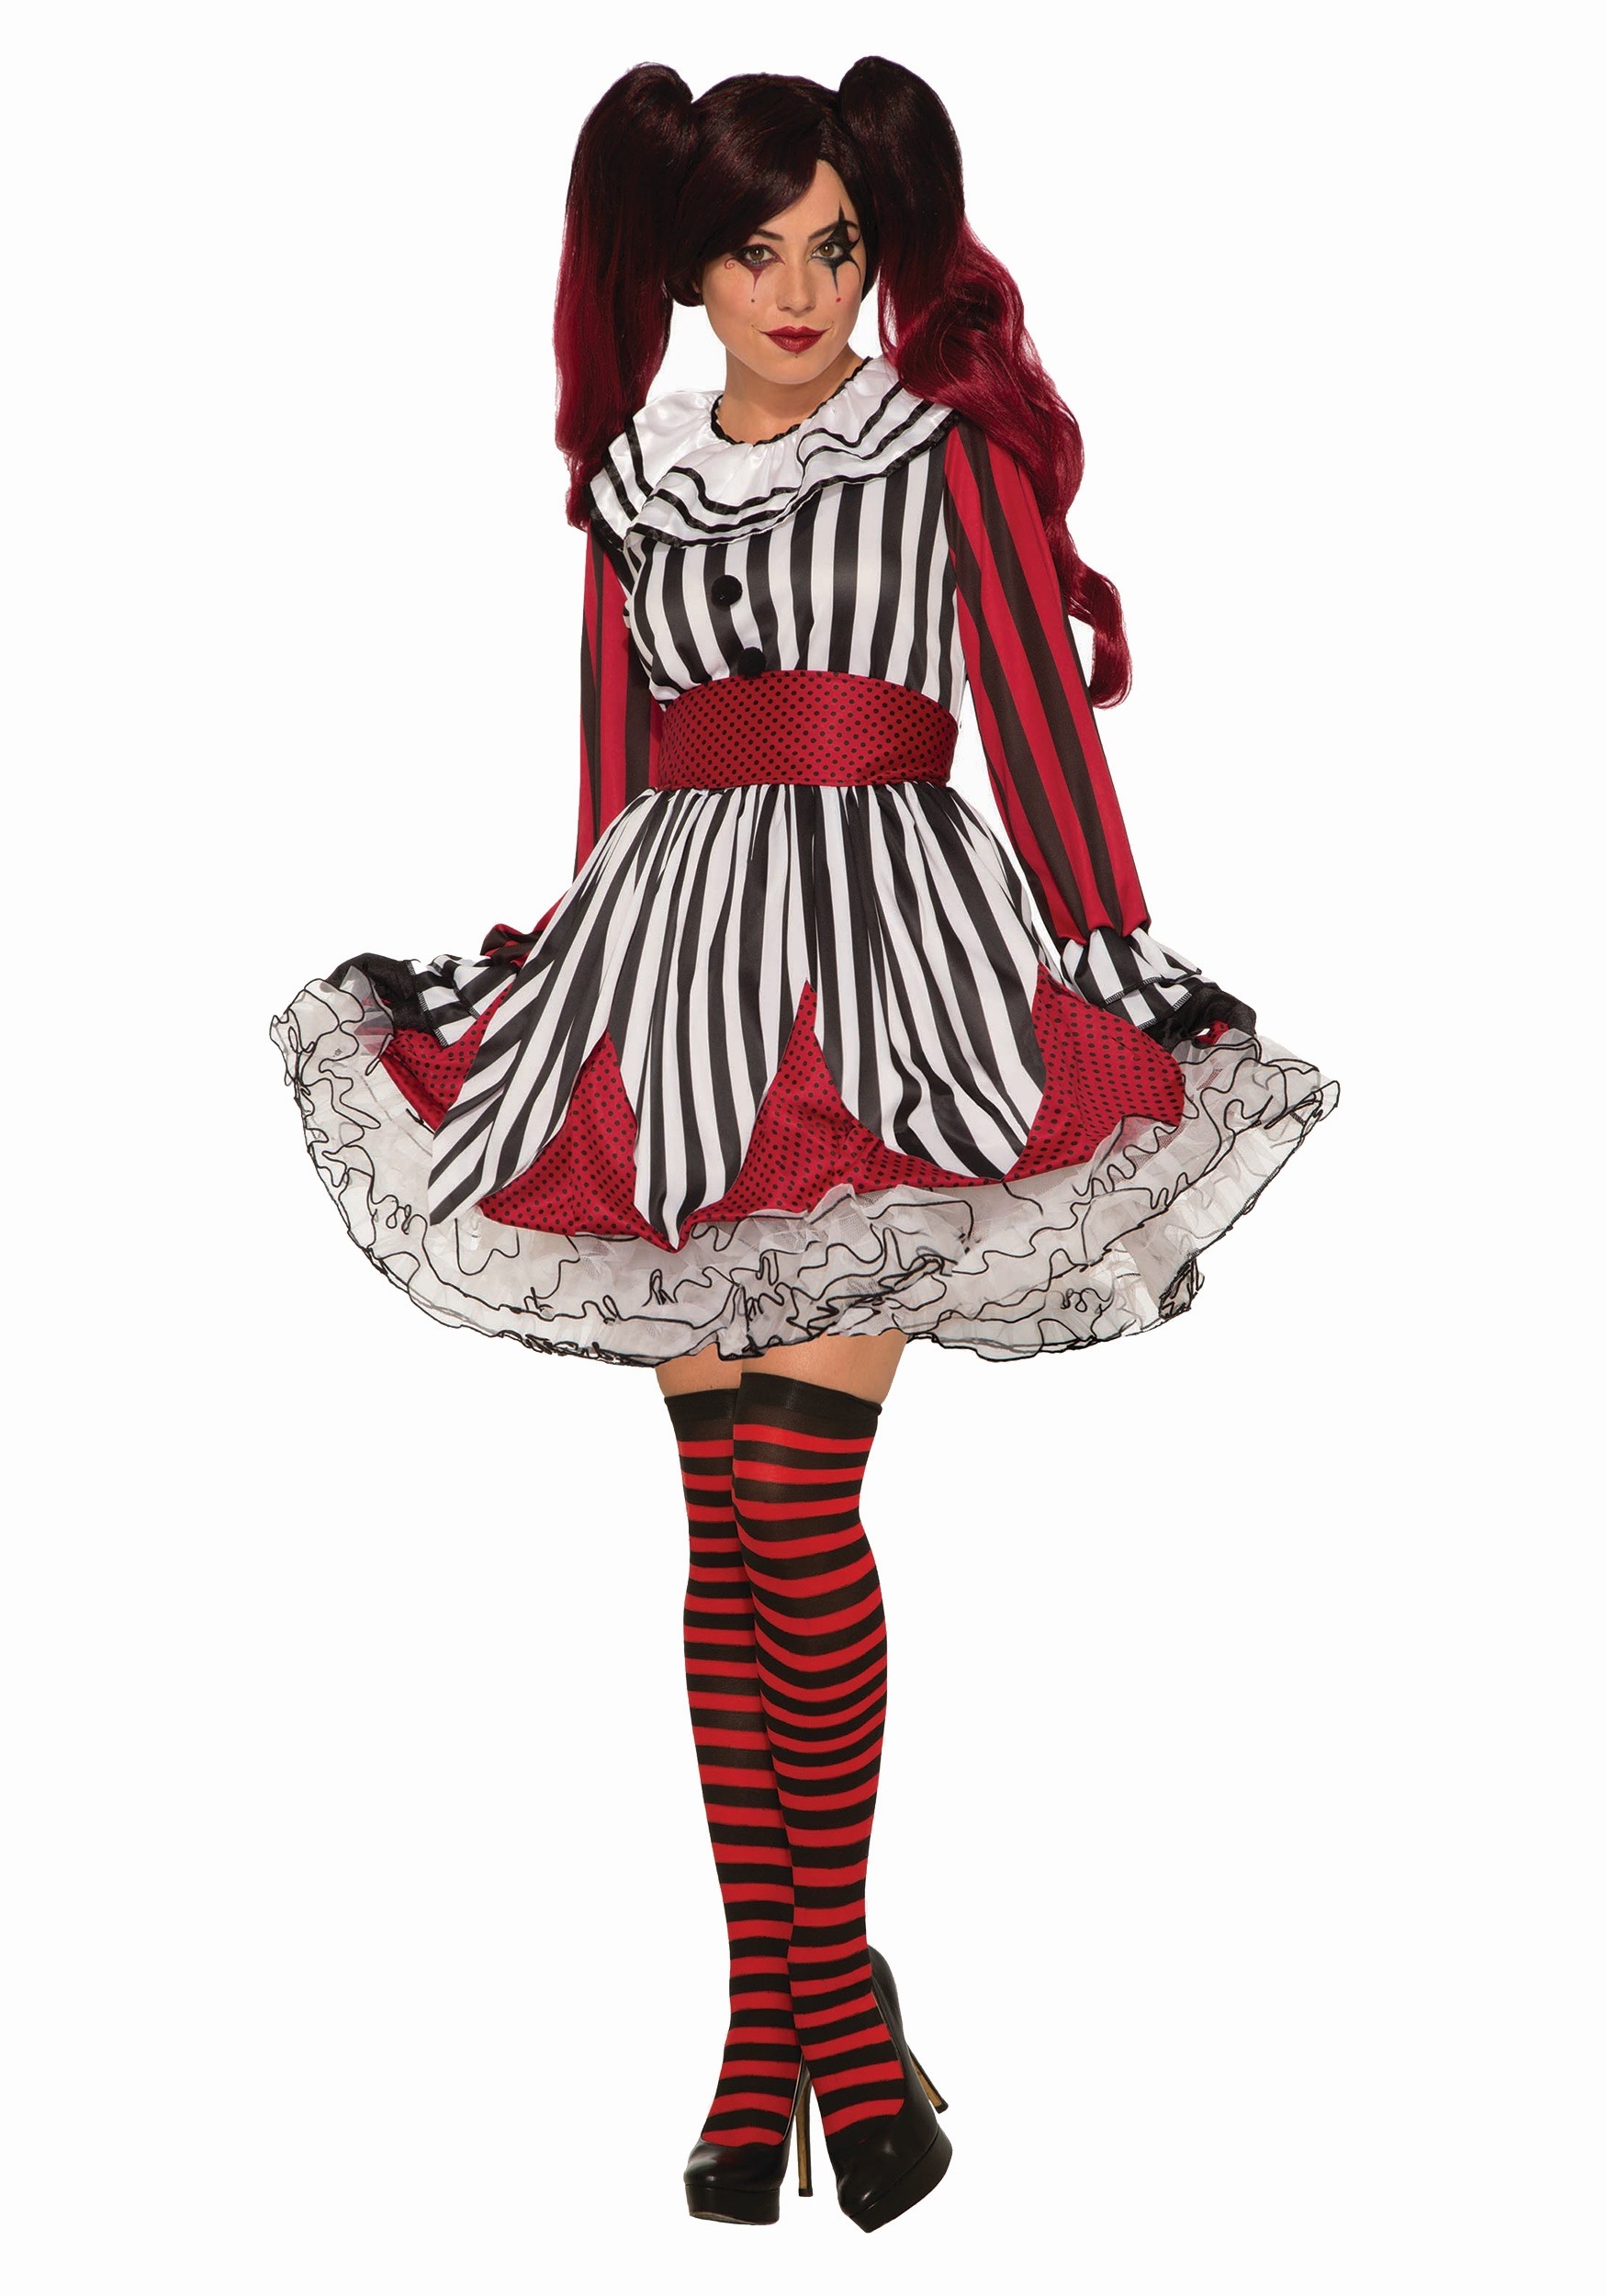 Miss Mischief the Clown Costume